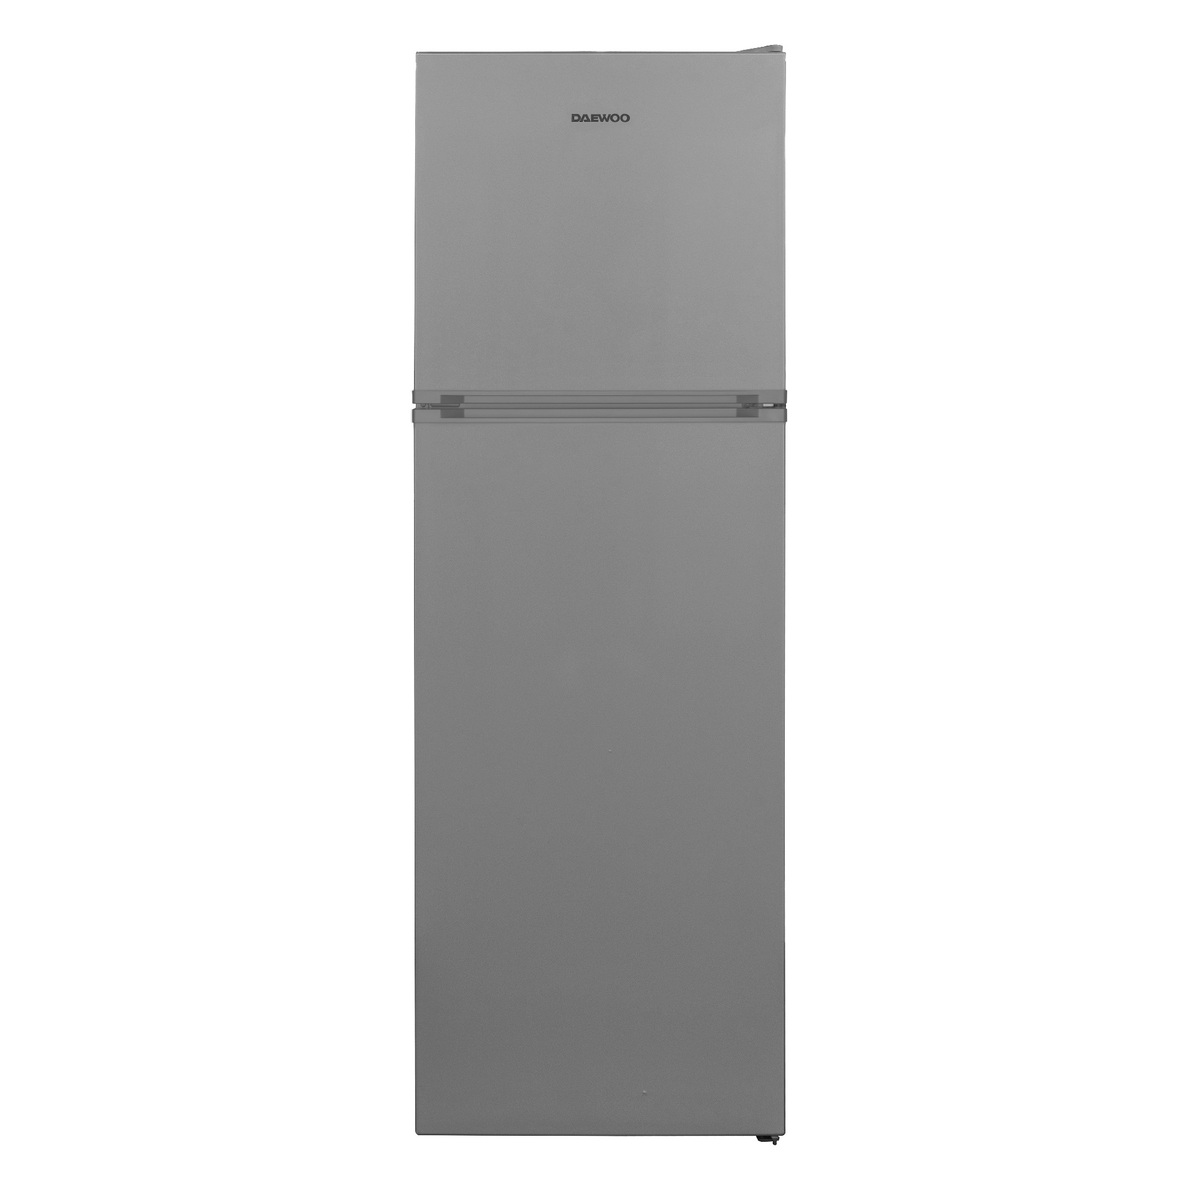 Daewoo 250 L Double Door Refrigerator, Silver, DW-FR273S